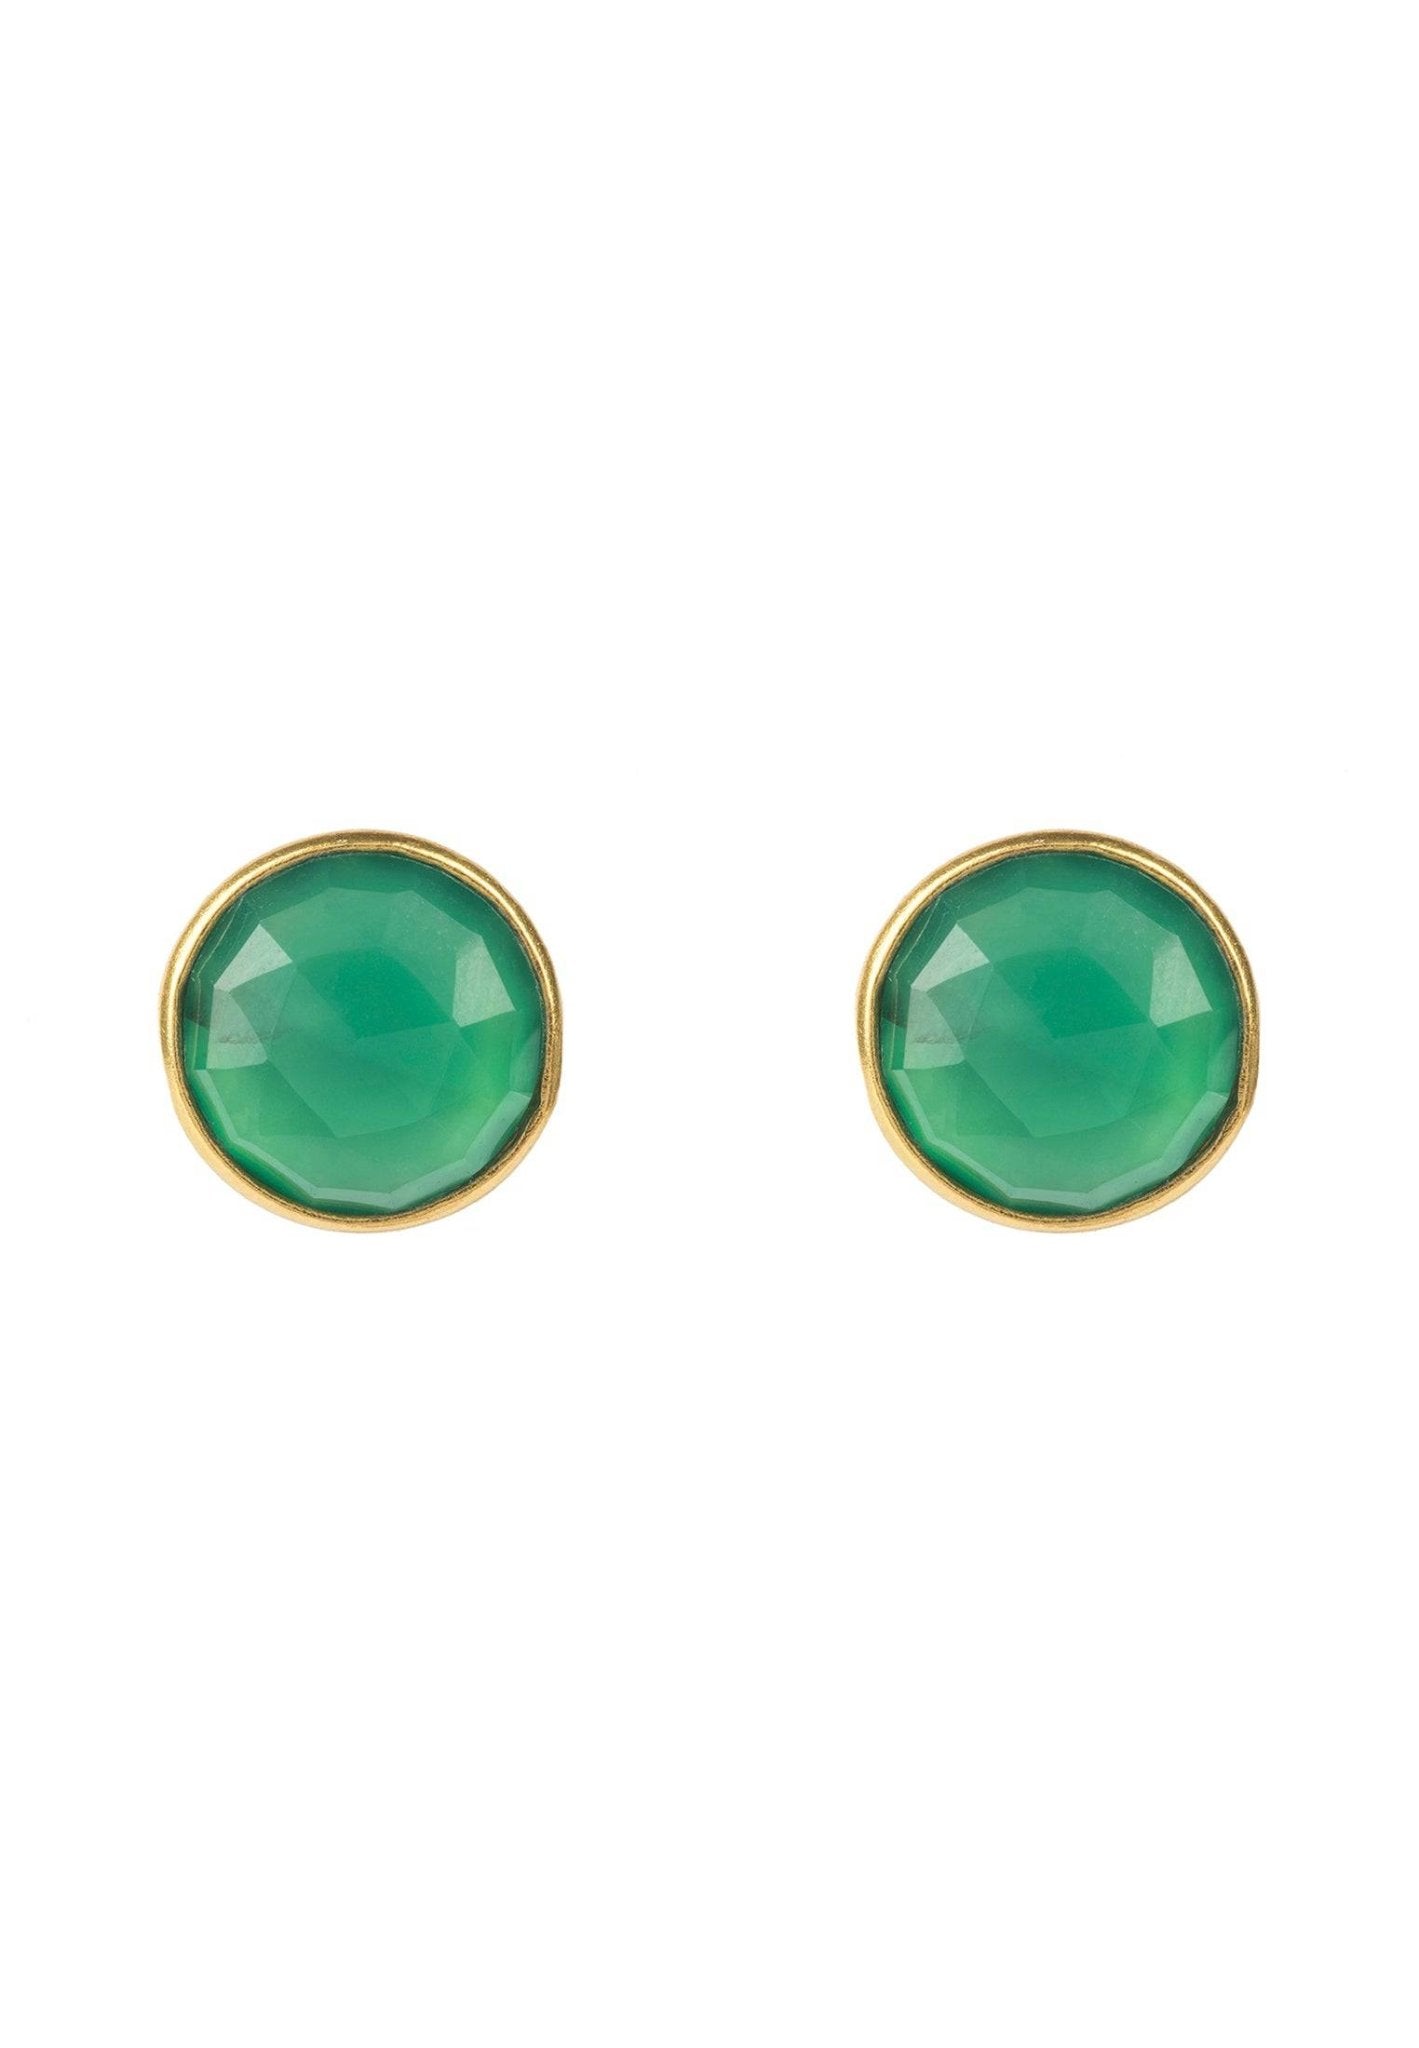 Medium Circle Gemstone Earrings Gold Green Onyx - LATELITA Earrings